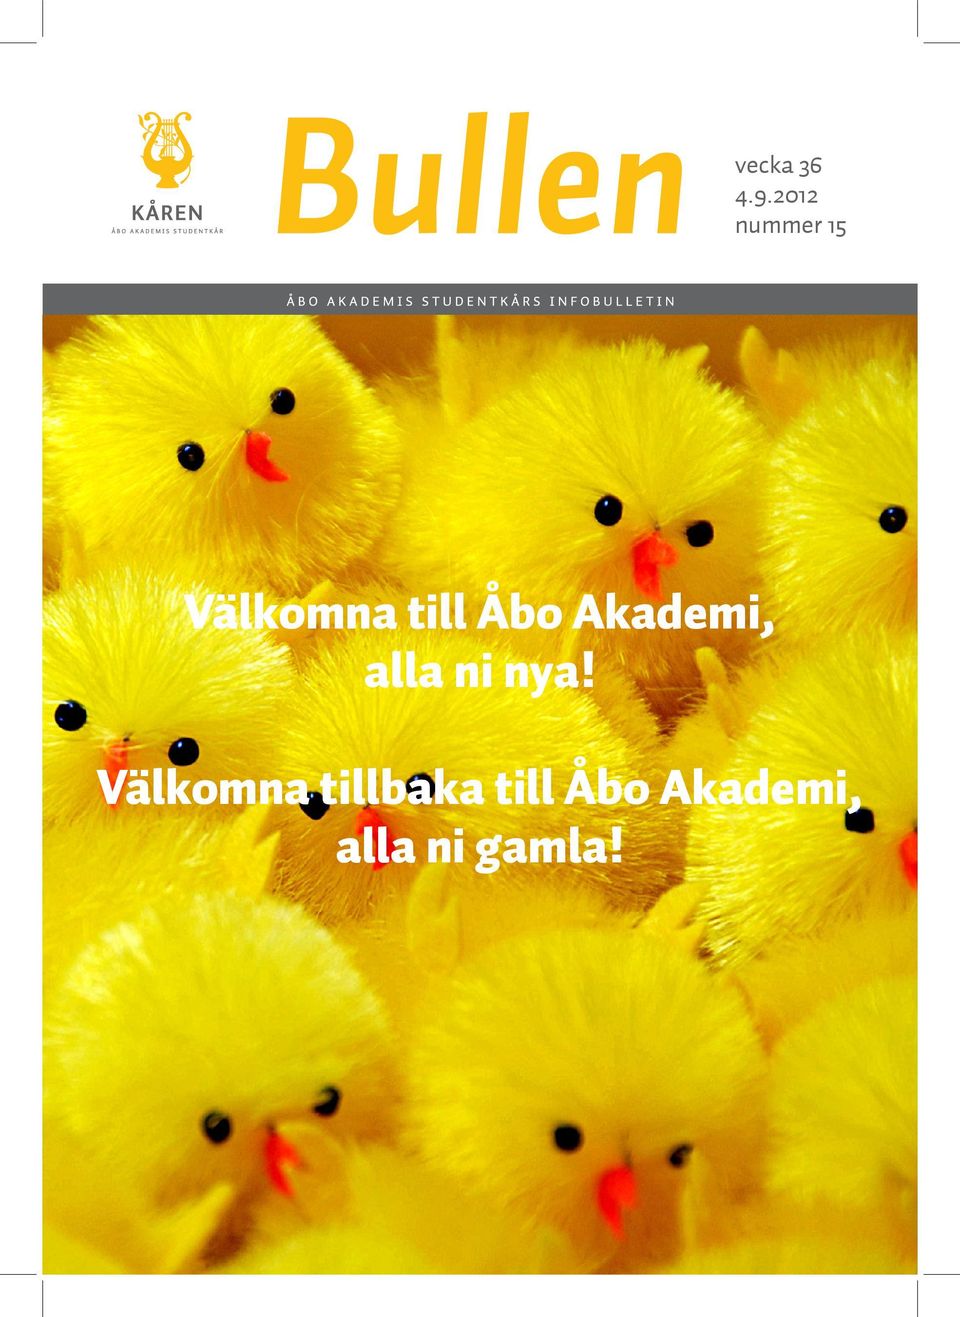 Åbo Akademi, alla ni nya!